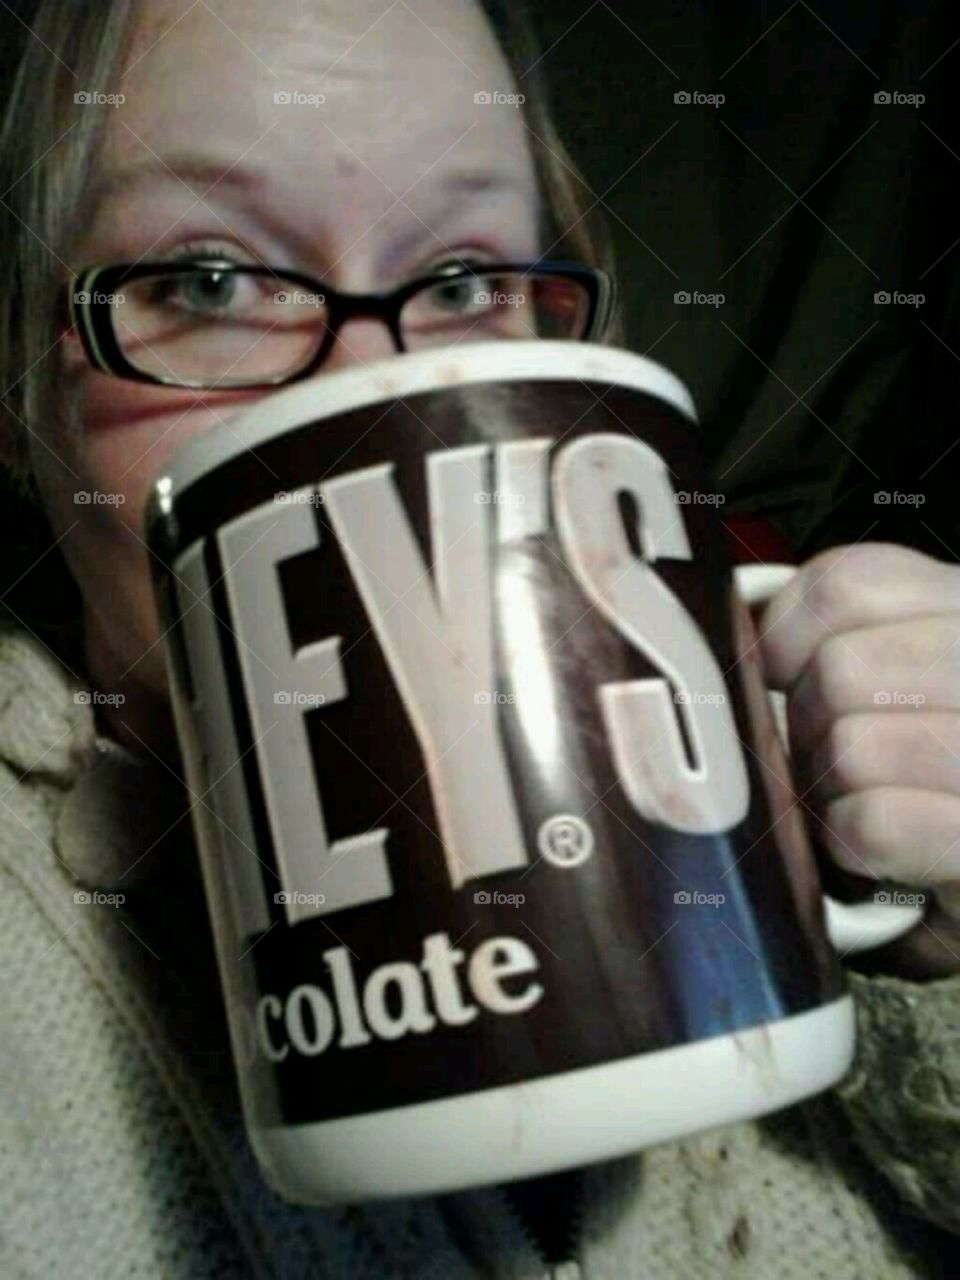 epic hot chocolate